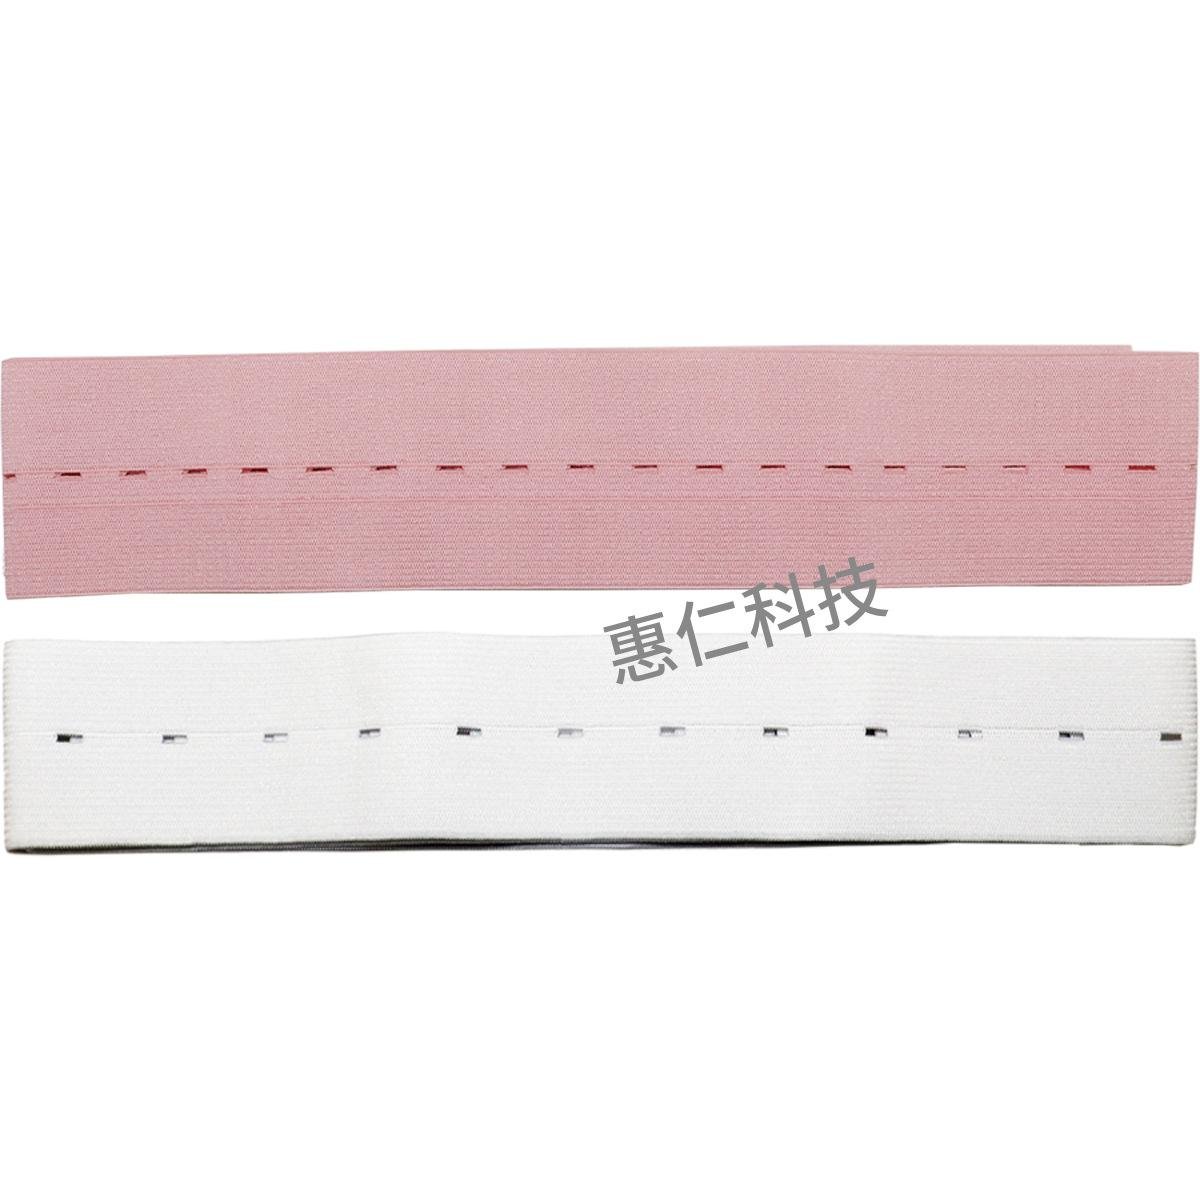 Disposable adjustable elastic band for prenatal white pink 2 pcs 3